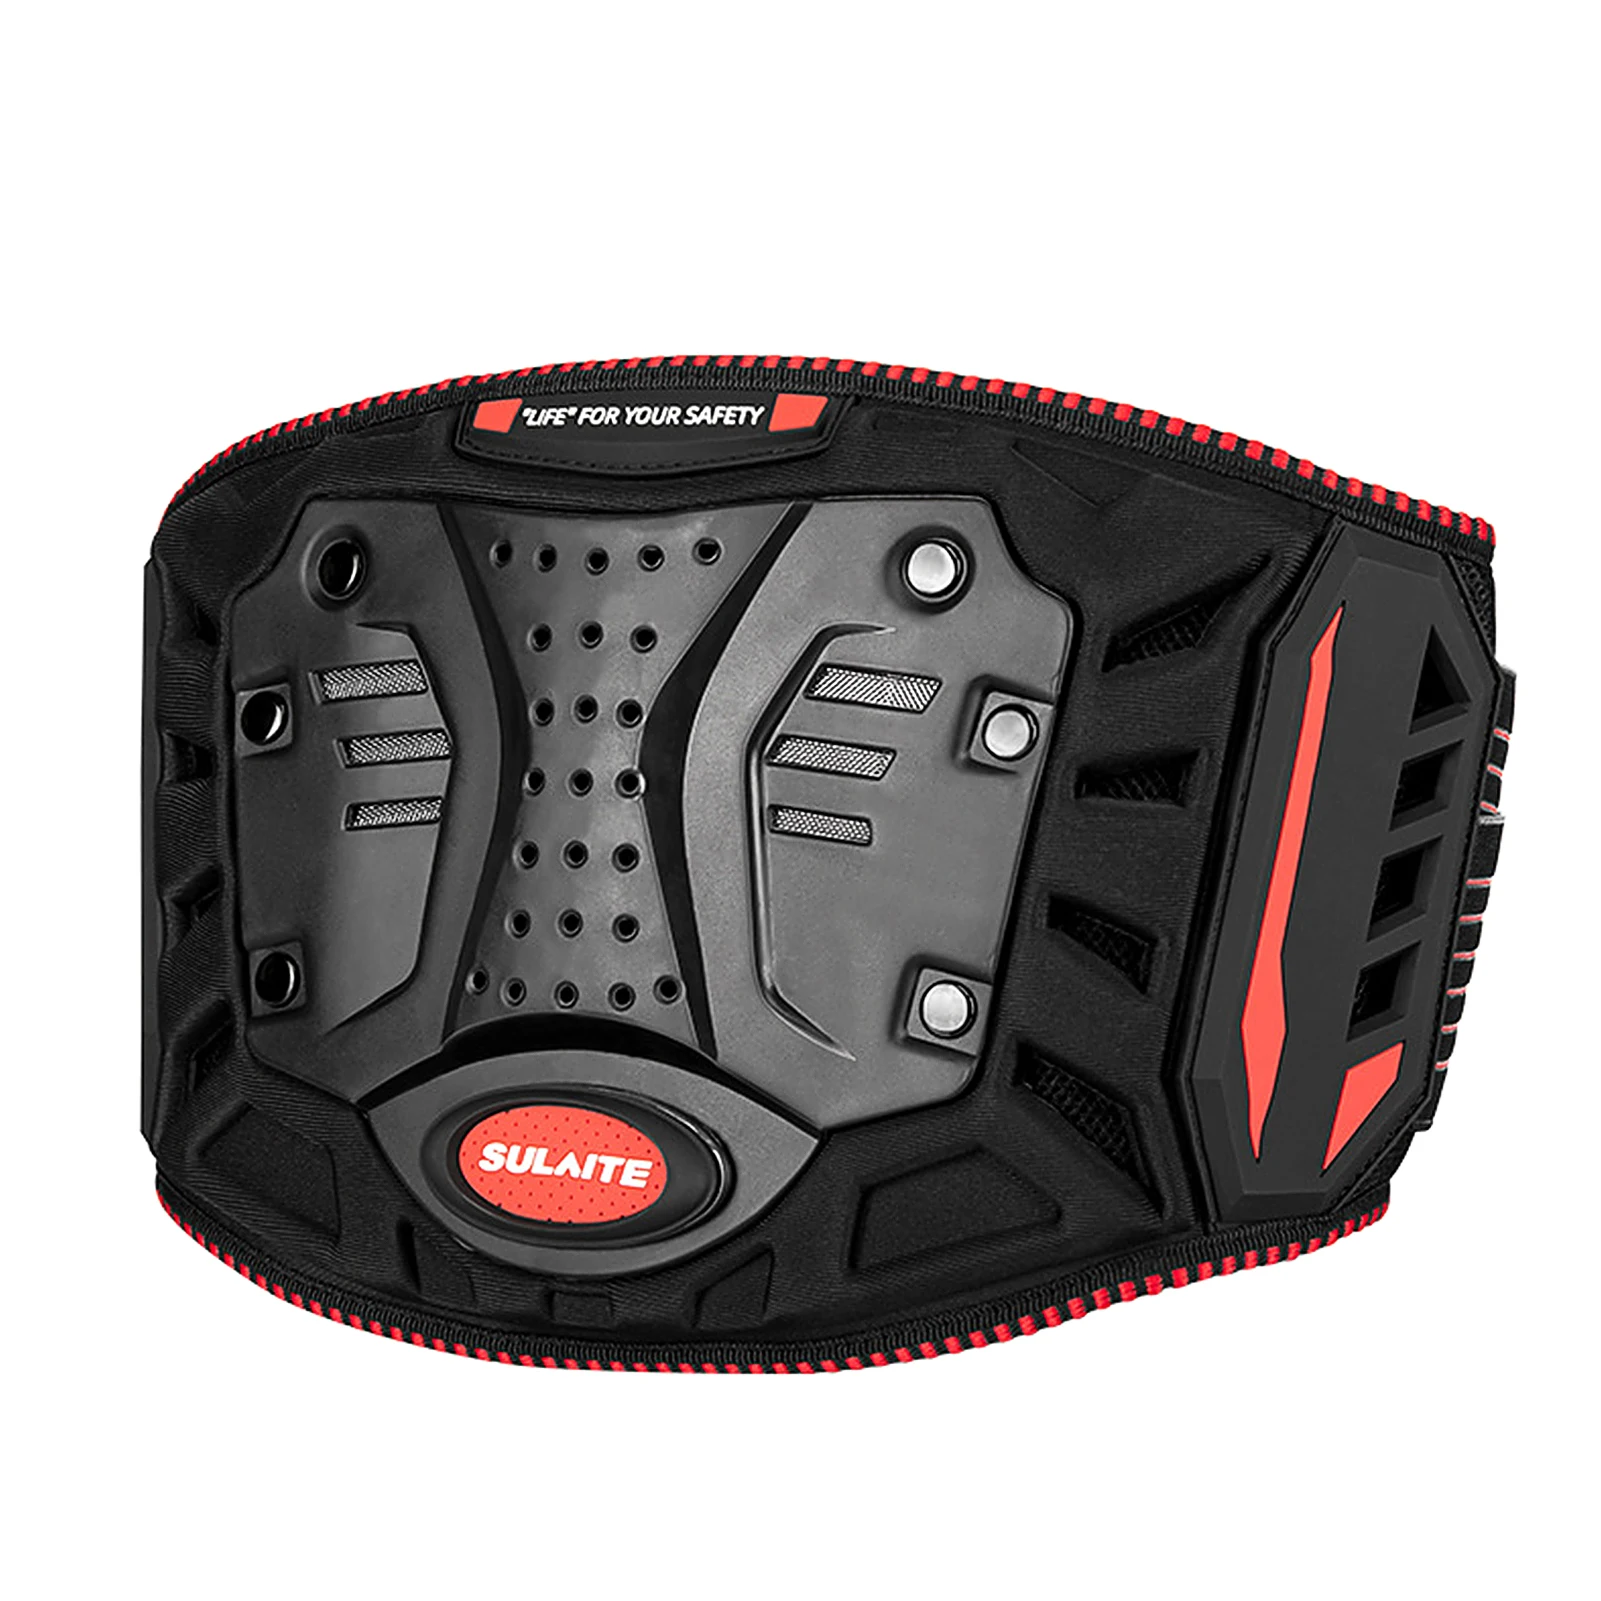 Vbest life Adjustable Waist Safety Belt Motorcycle Waist Support Belt Protection Strap Gear in Black 